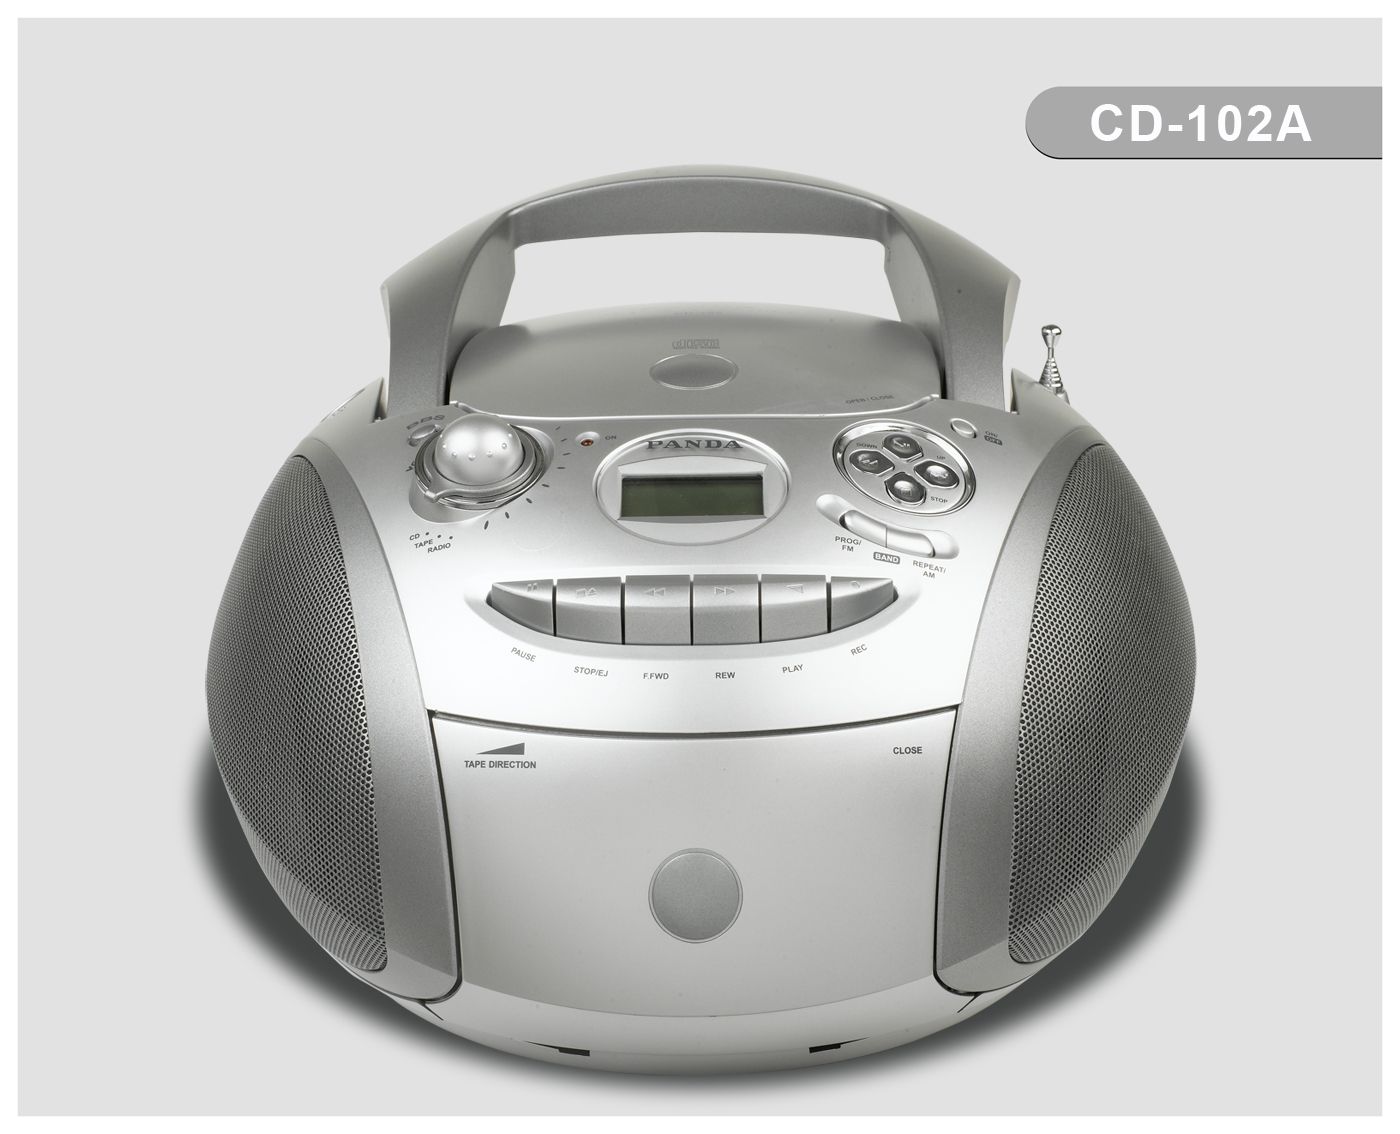 CD-102A 便携式CD播放机